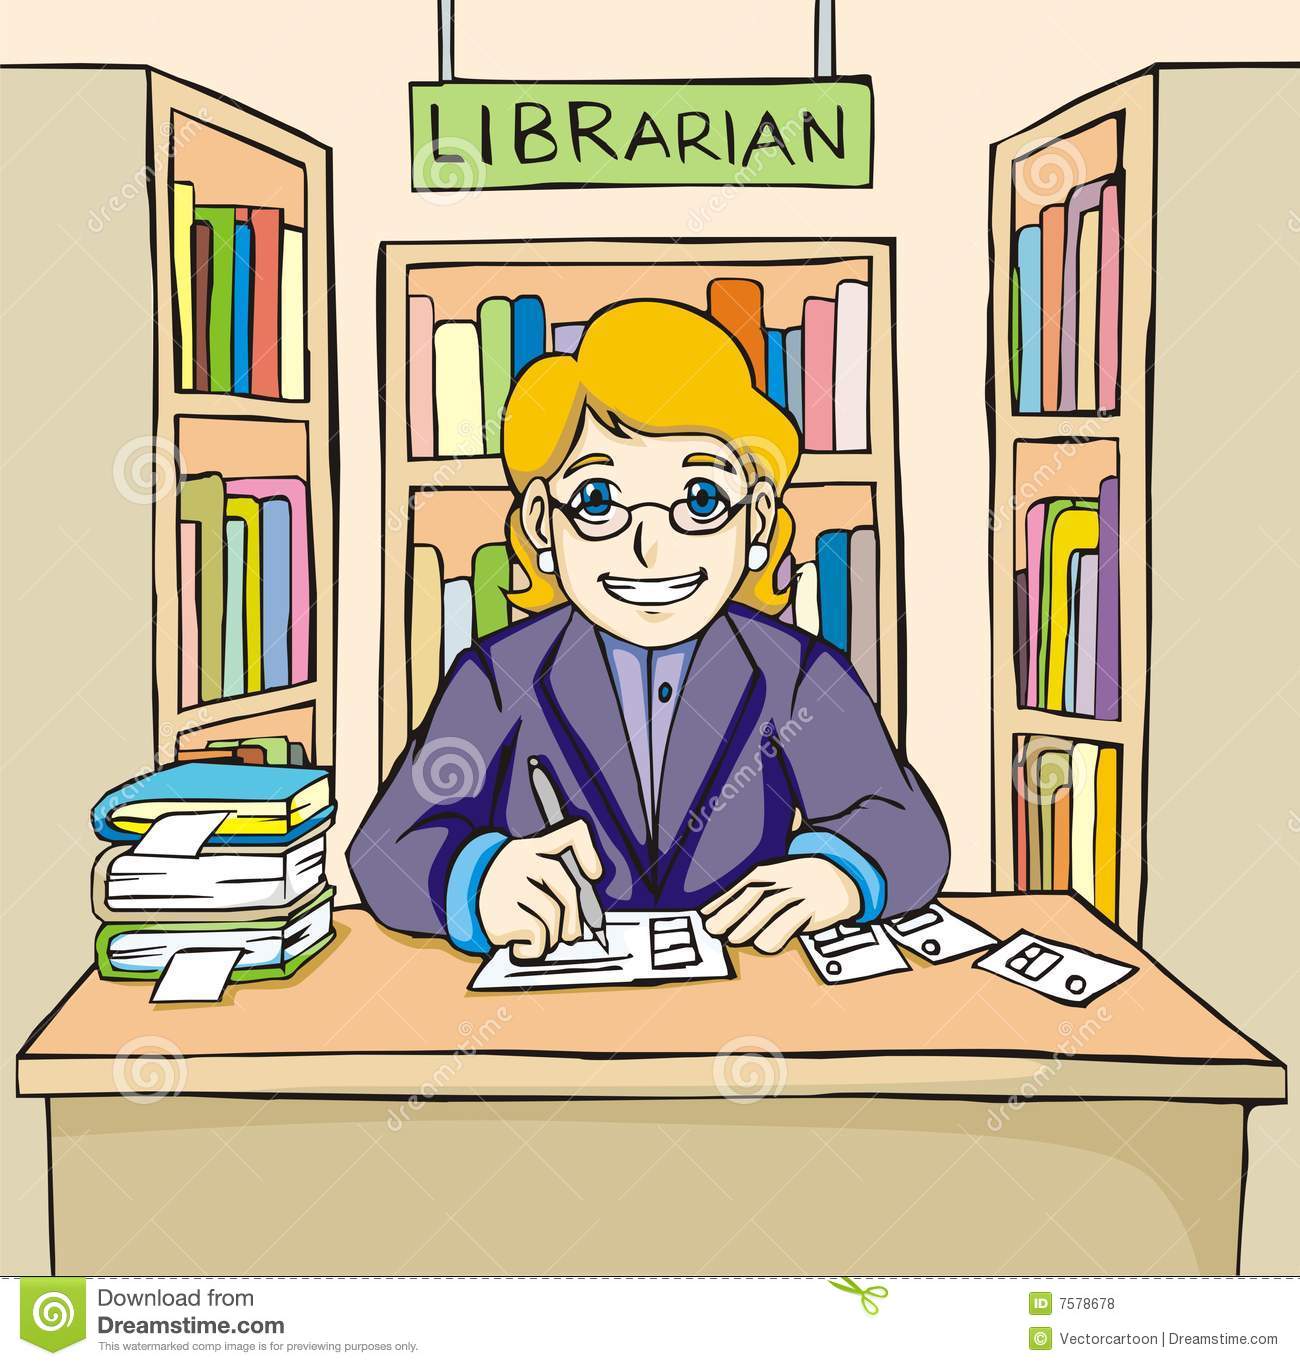 Library free librarian clipar